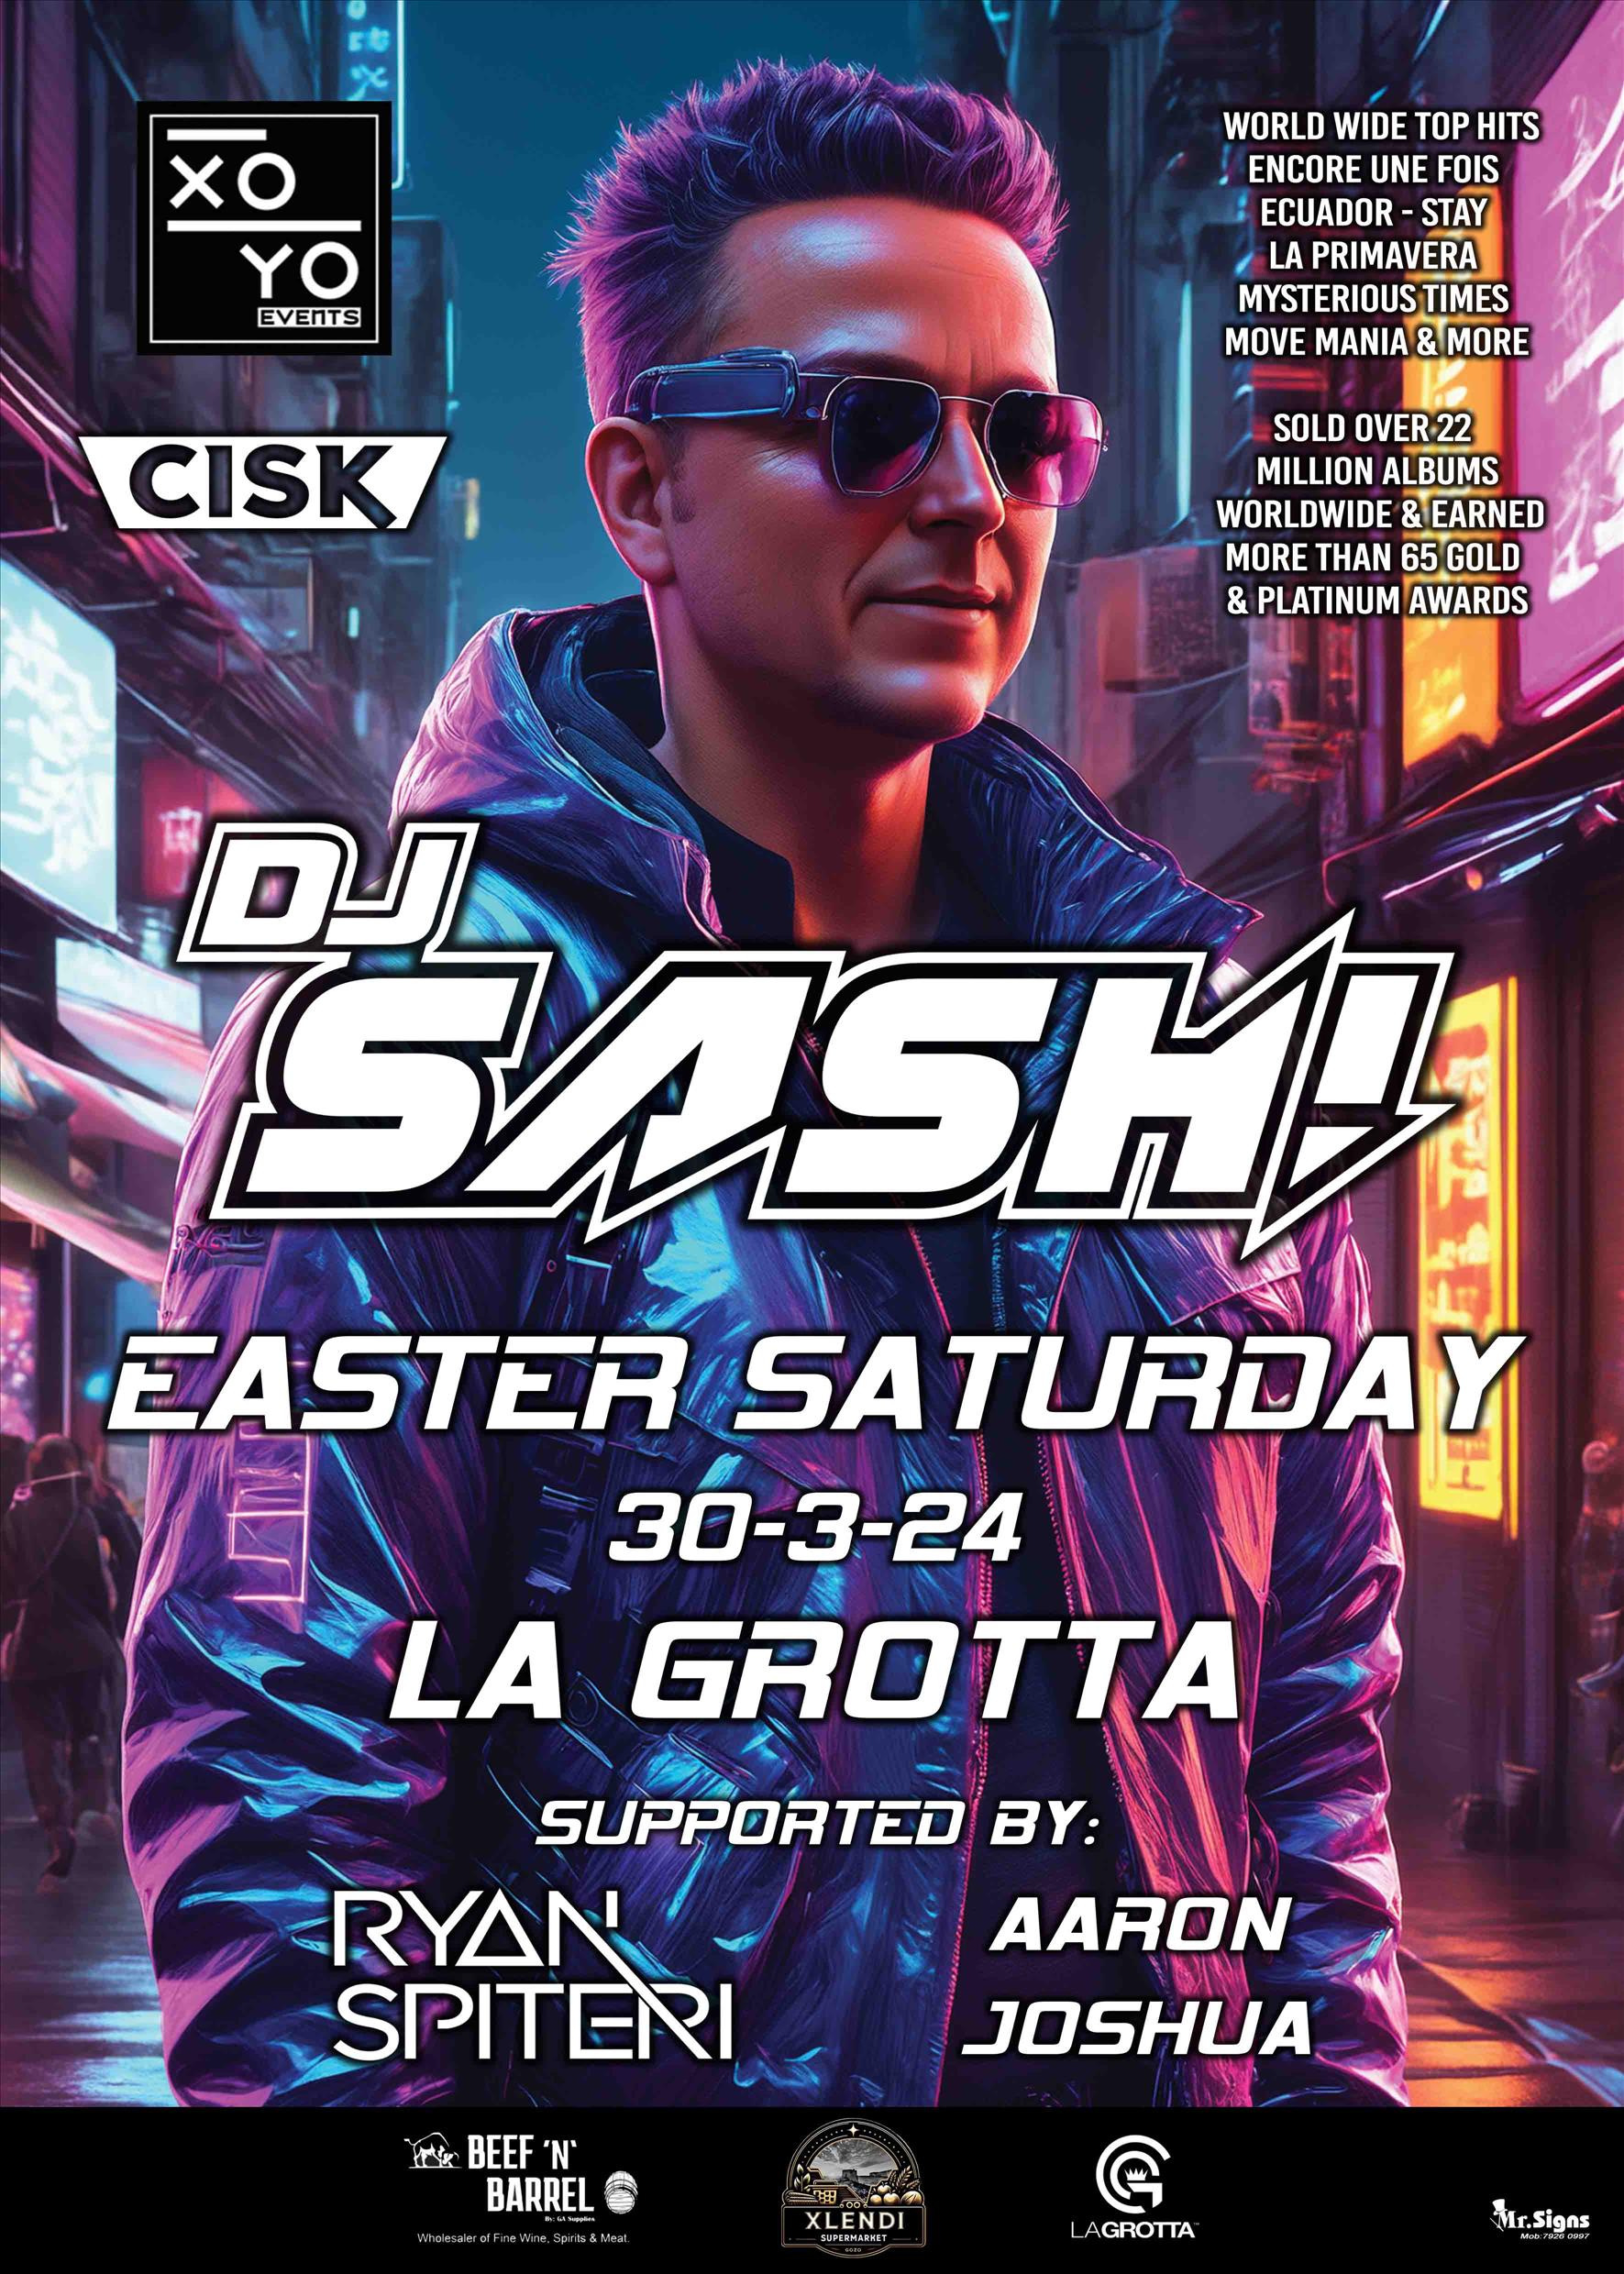 DJ SASH! / EASTER SATURDAY / LA GROTTA poster